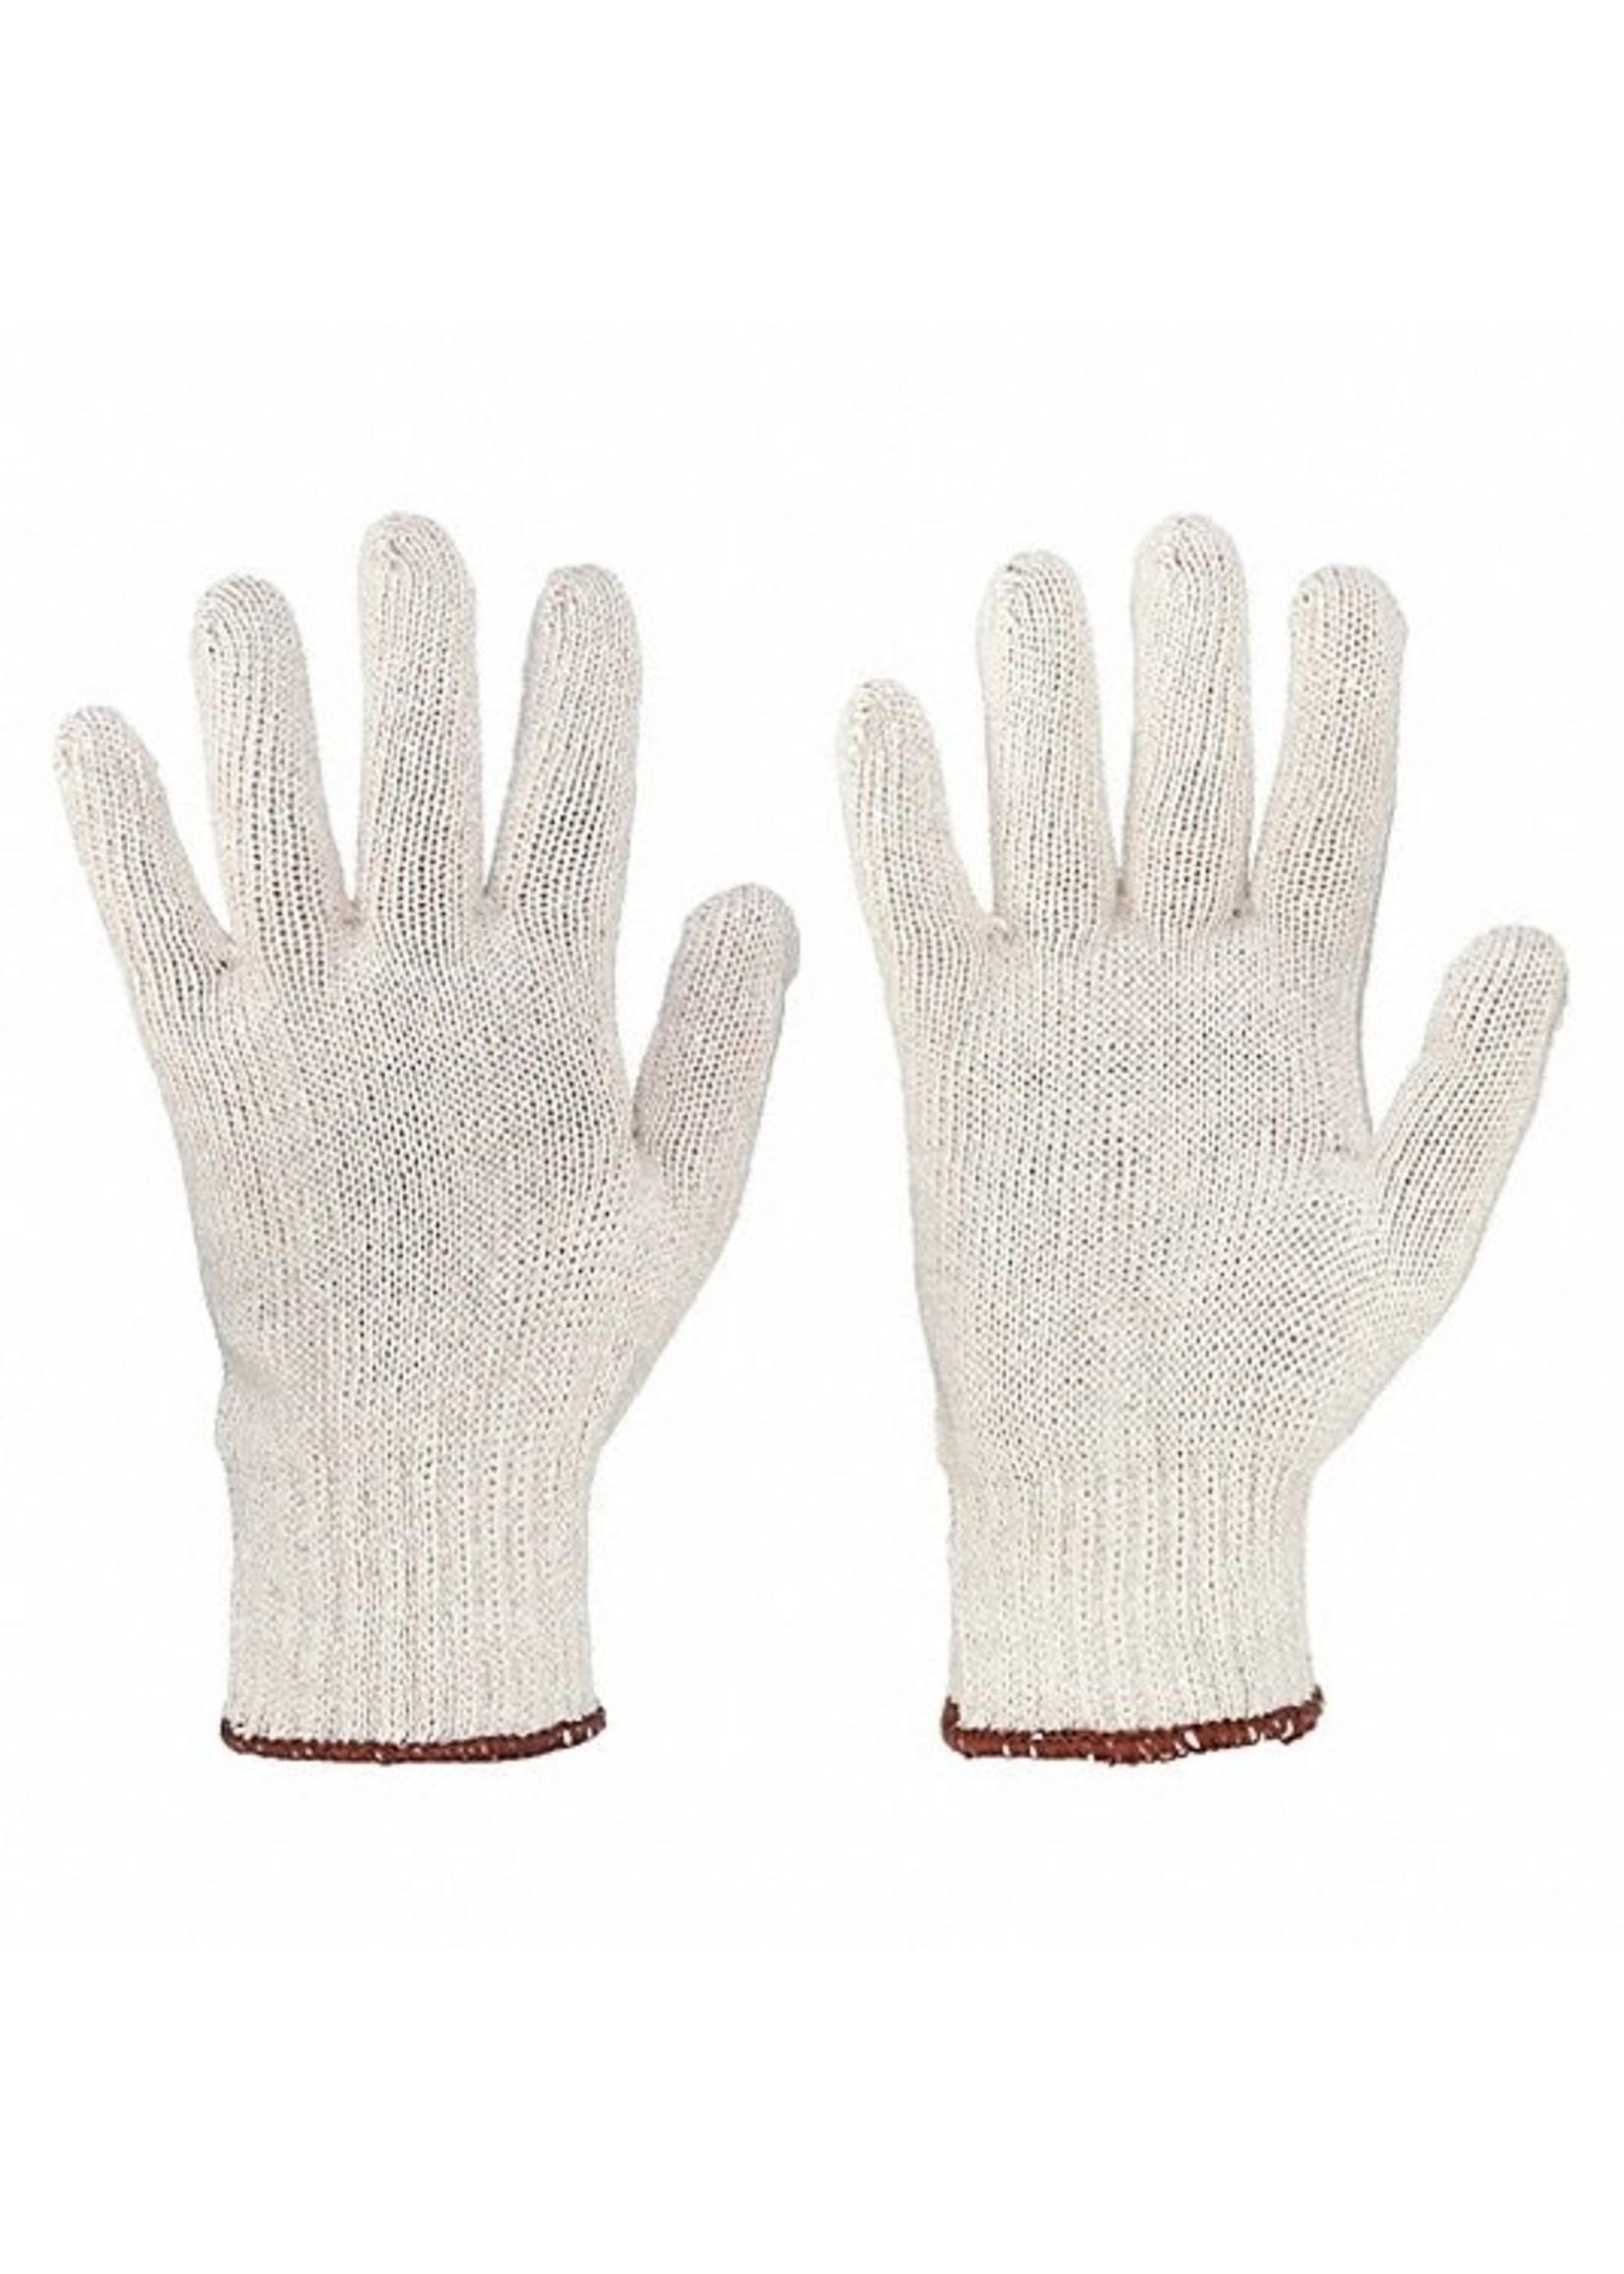 Condor Hand Saver Knit Glove, 12 Pair, Medium